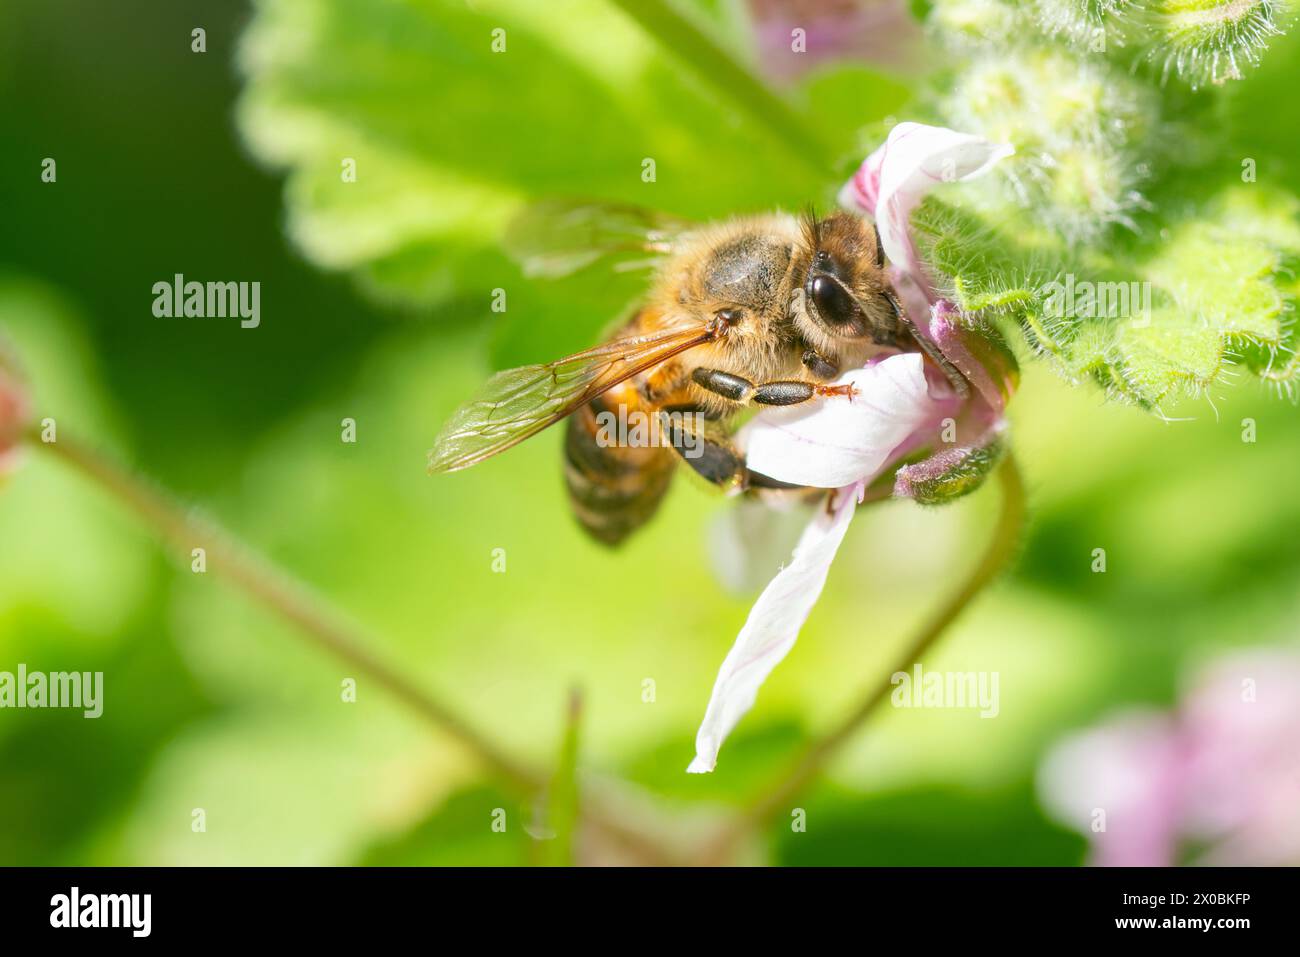 Honey bee pollinating an Erodium flower Stock Photo